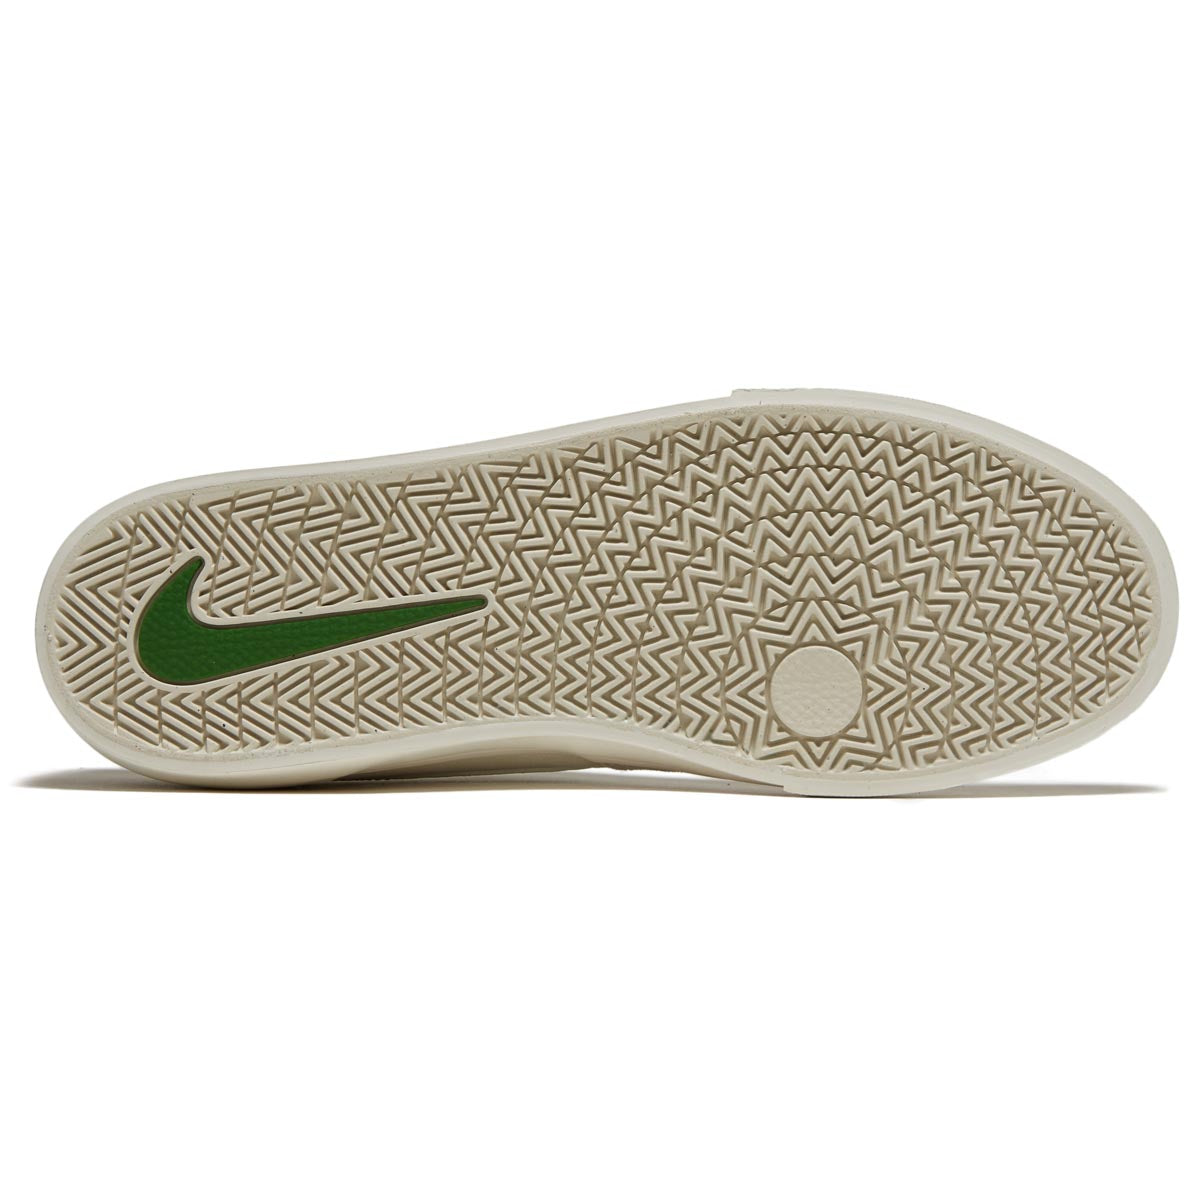 Nike SB Chron 2 Shoes - Phantom/Chlorophyll/Summit White/Sail image 4